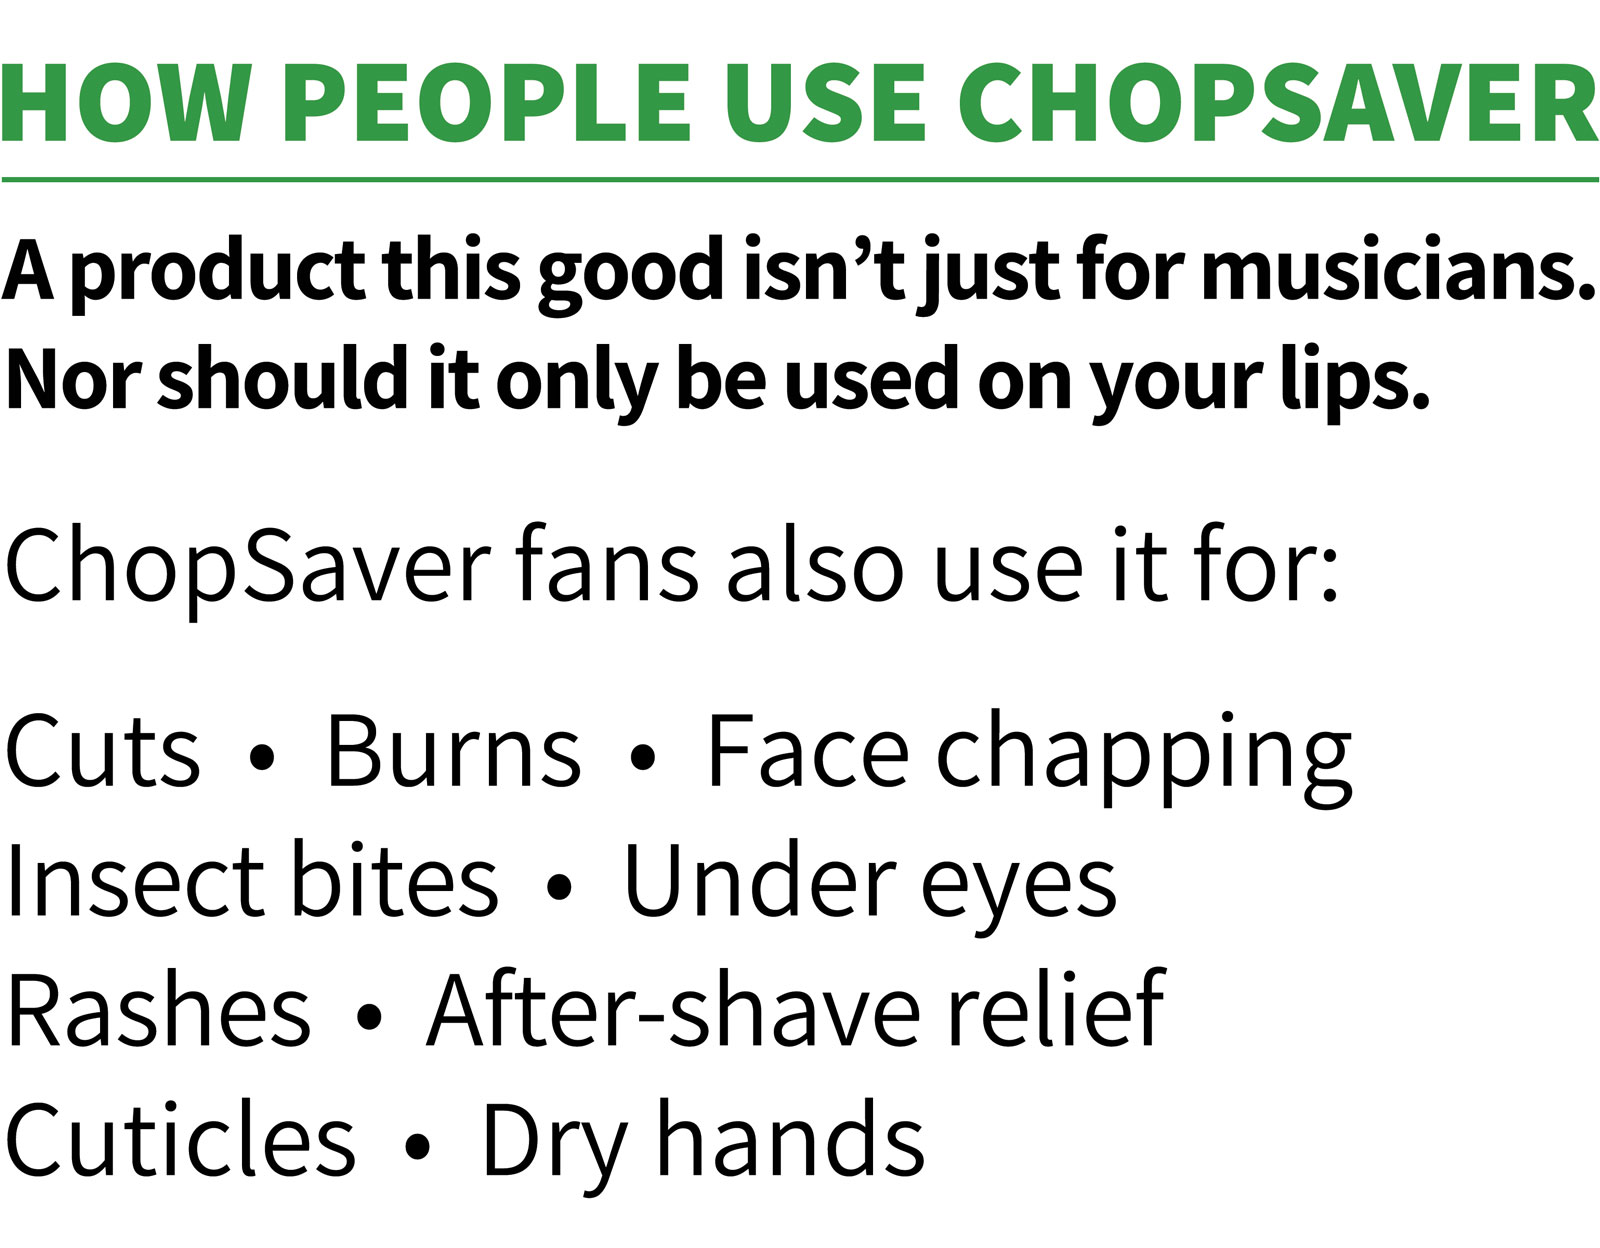 HOW PEOPLE USE CHOP SAVER